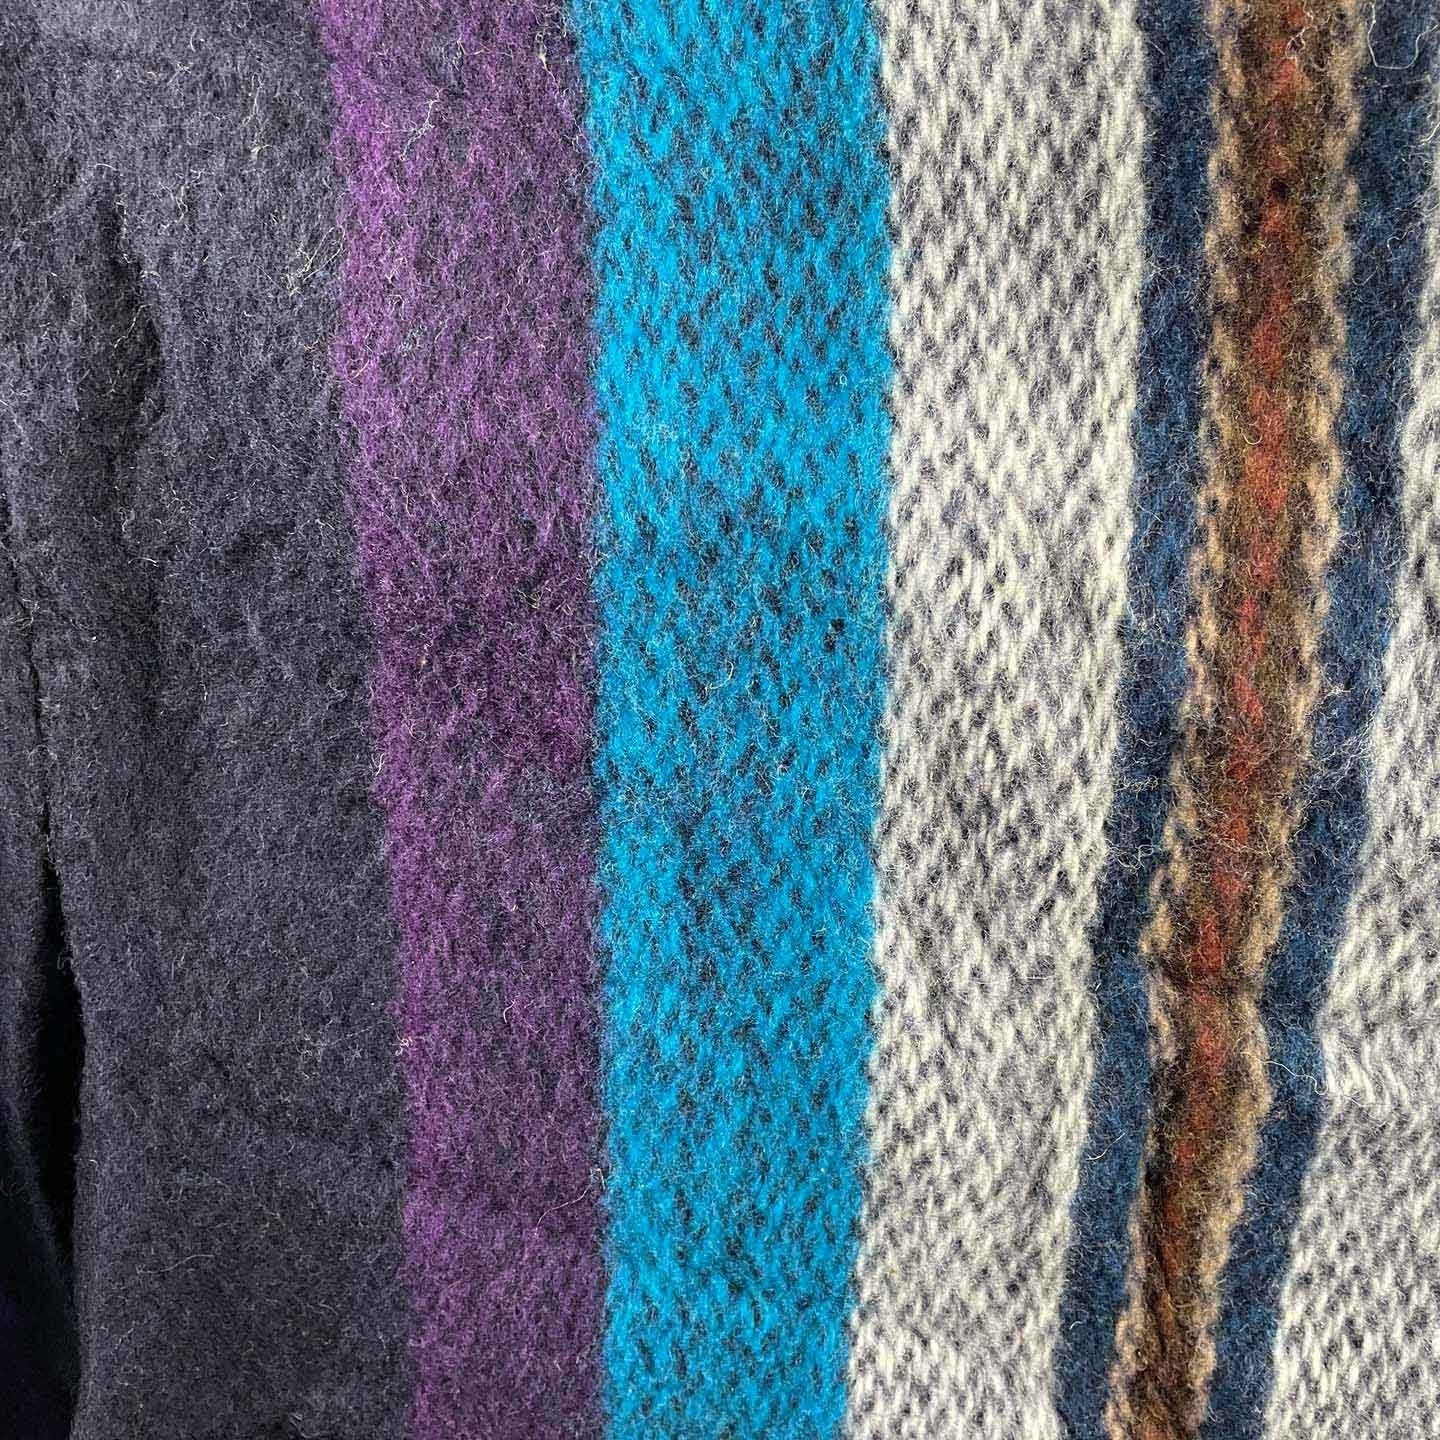 Hippie Hooded Wool Poncho | Navy Purple